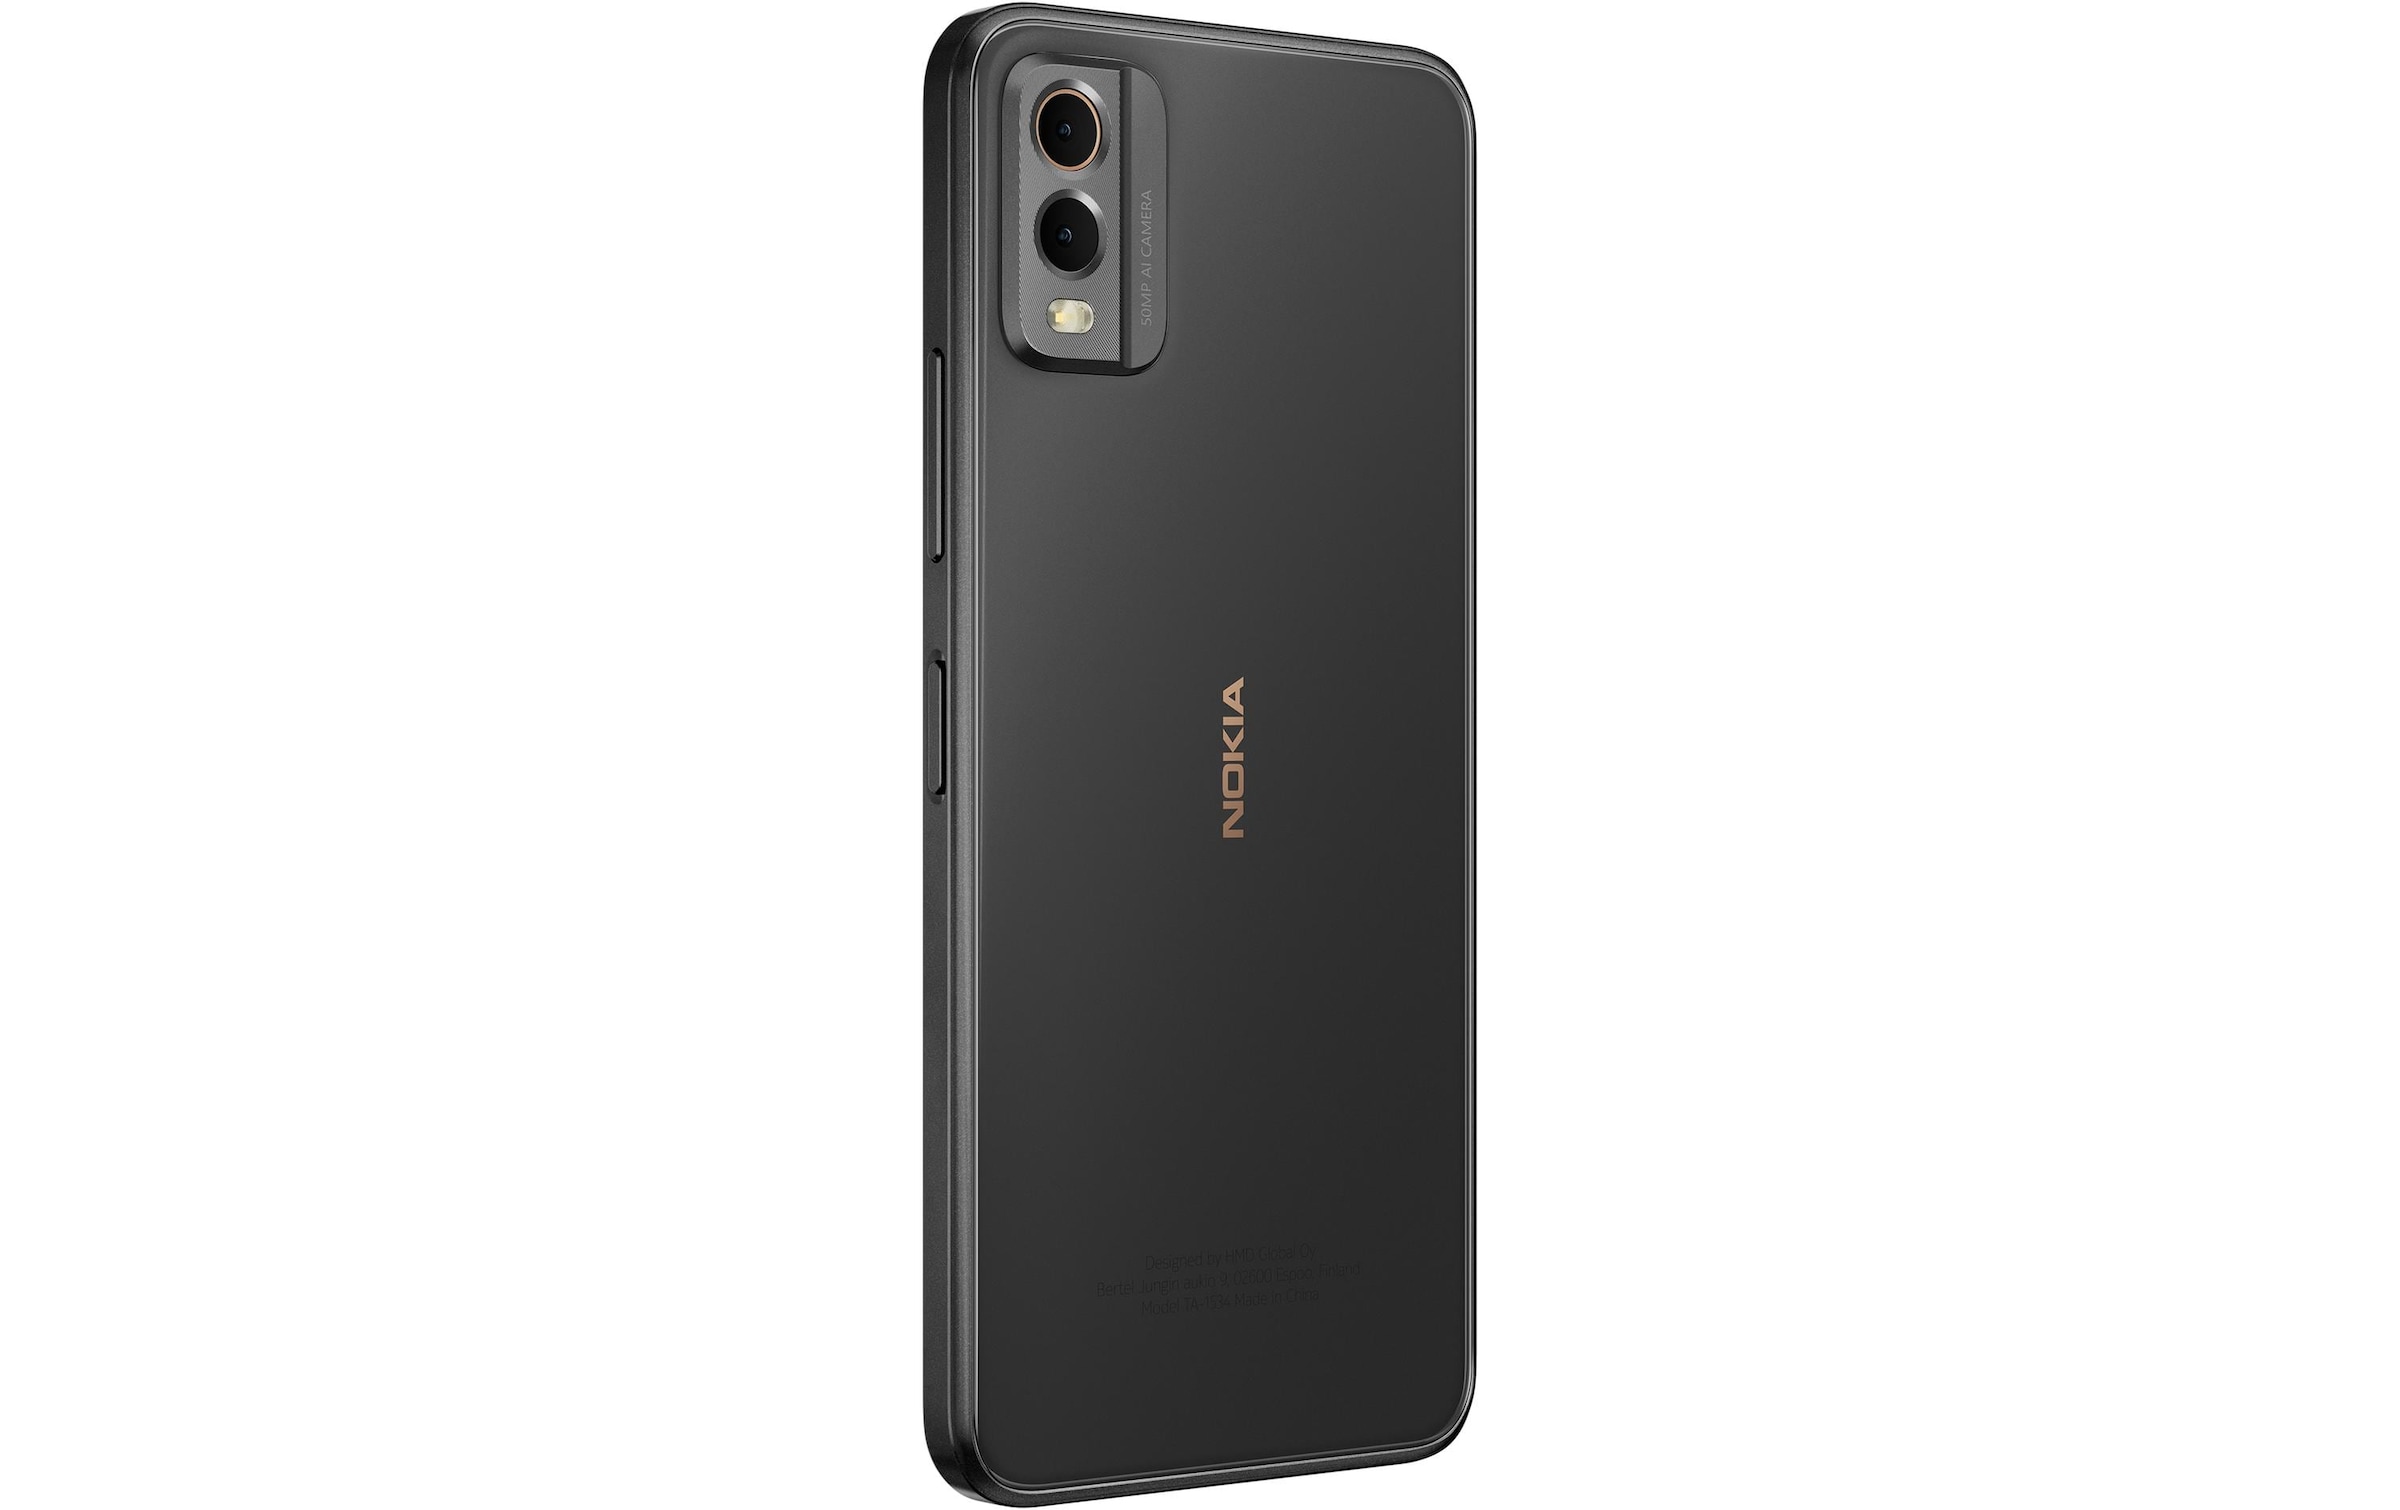 Nokia Smartphone »64 GB Schwarz«, Schwarz, 16,49 cm/6,52 Zoll, 64 GB Speicherplatz, 50 MP Kamera